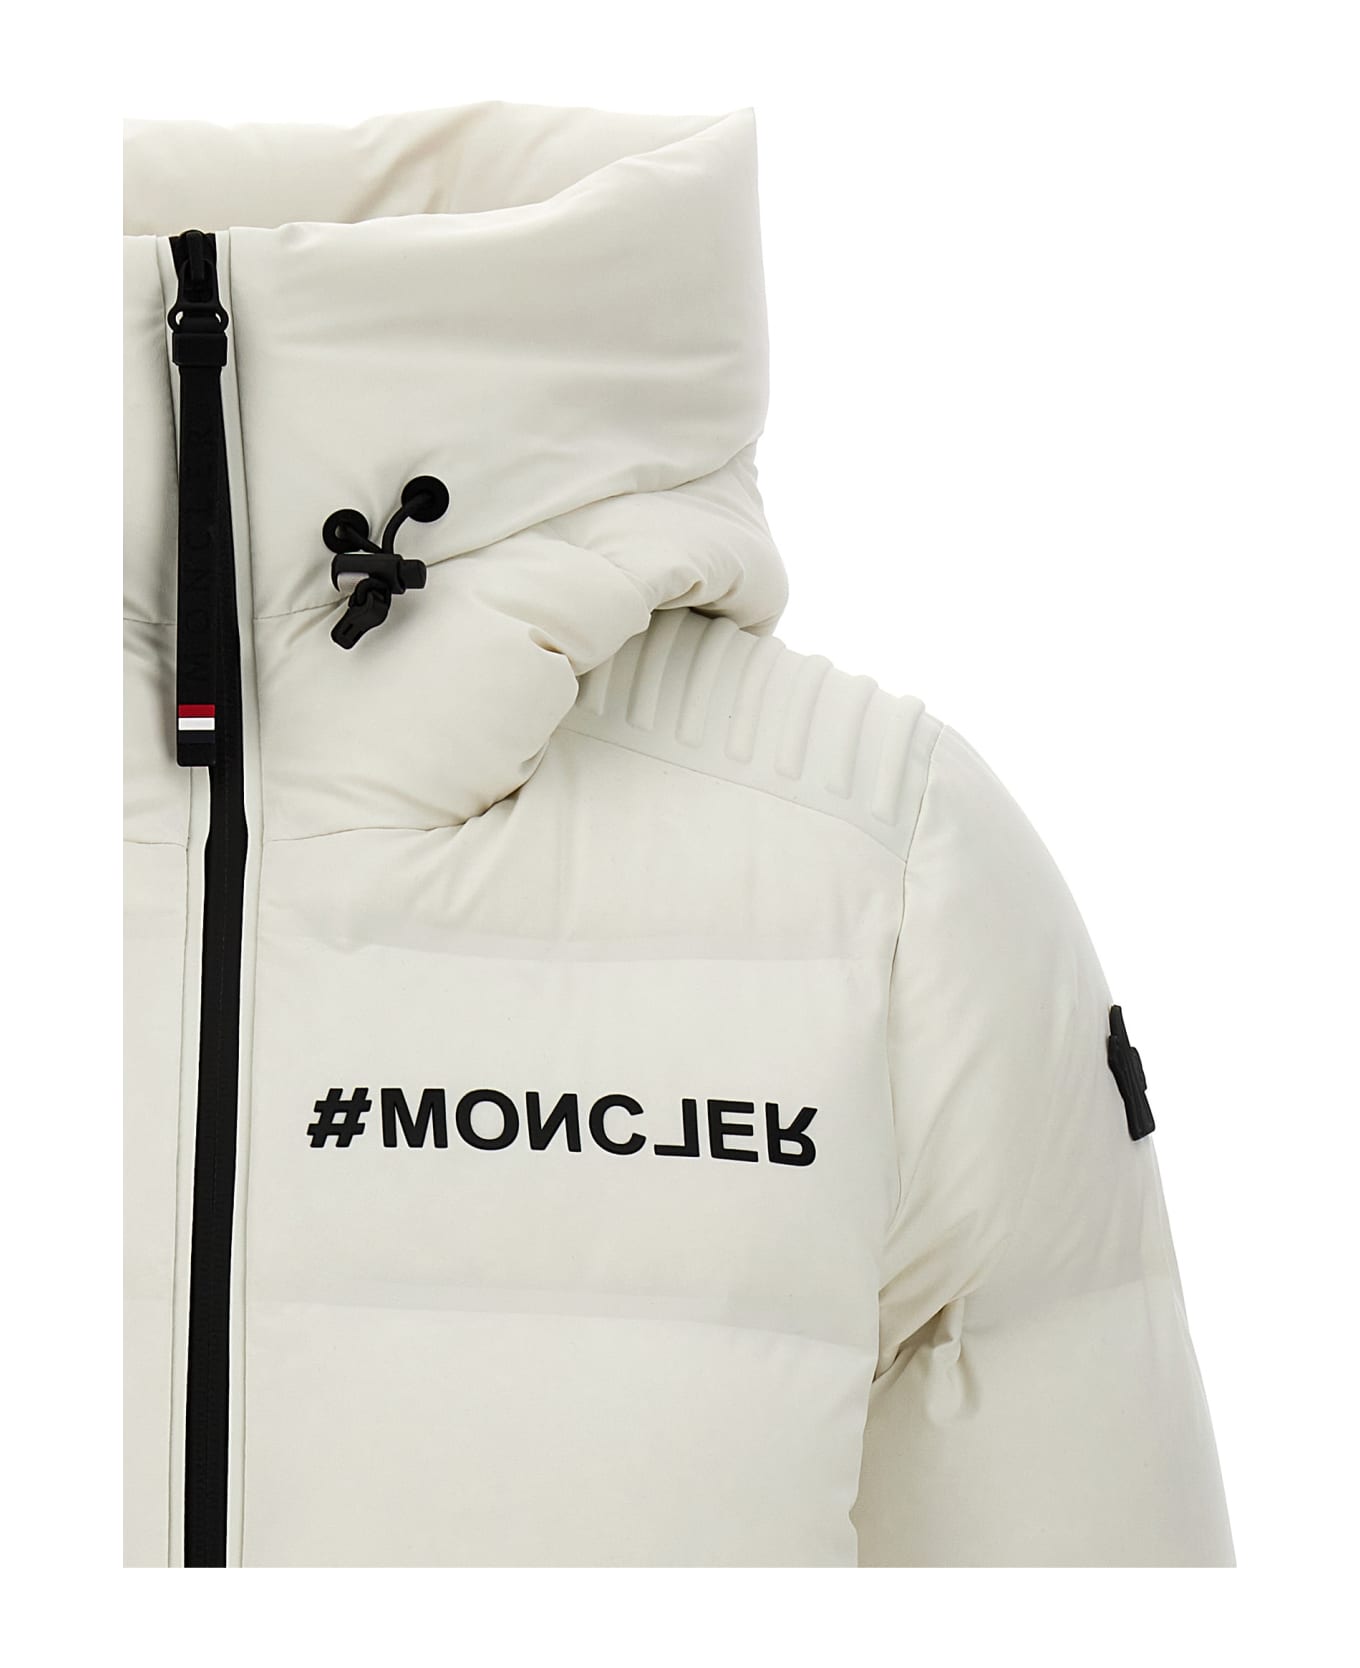 Moncler Grenoble 'suisses' Down Jacket - White/Black